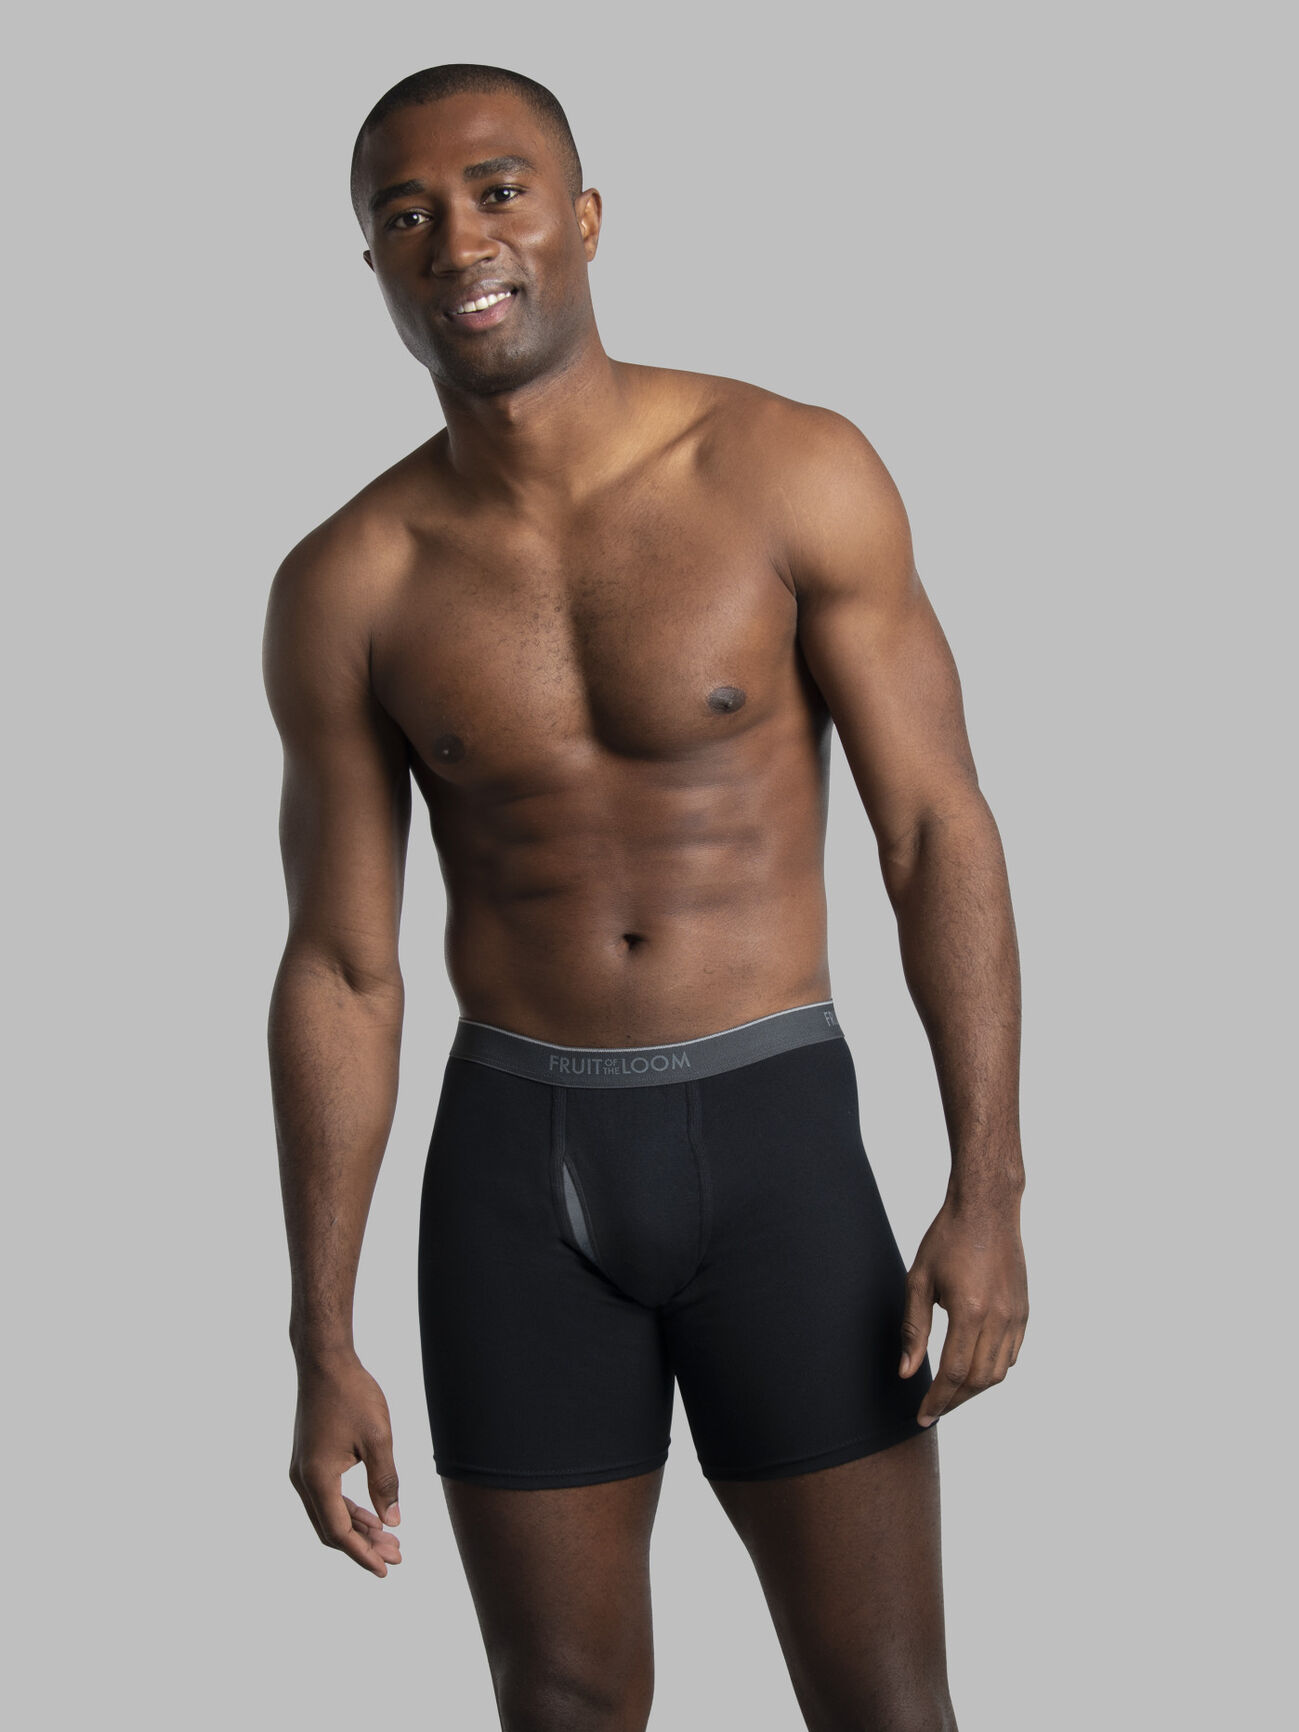 Fruit Of The Loom Mens Breathable Underwear Boxer Briefs, Long Leg